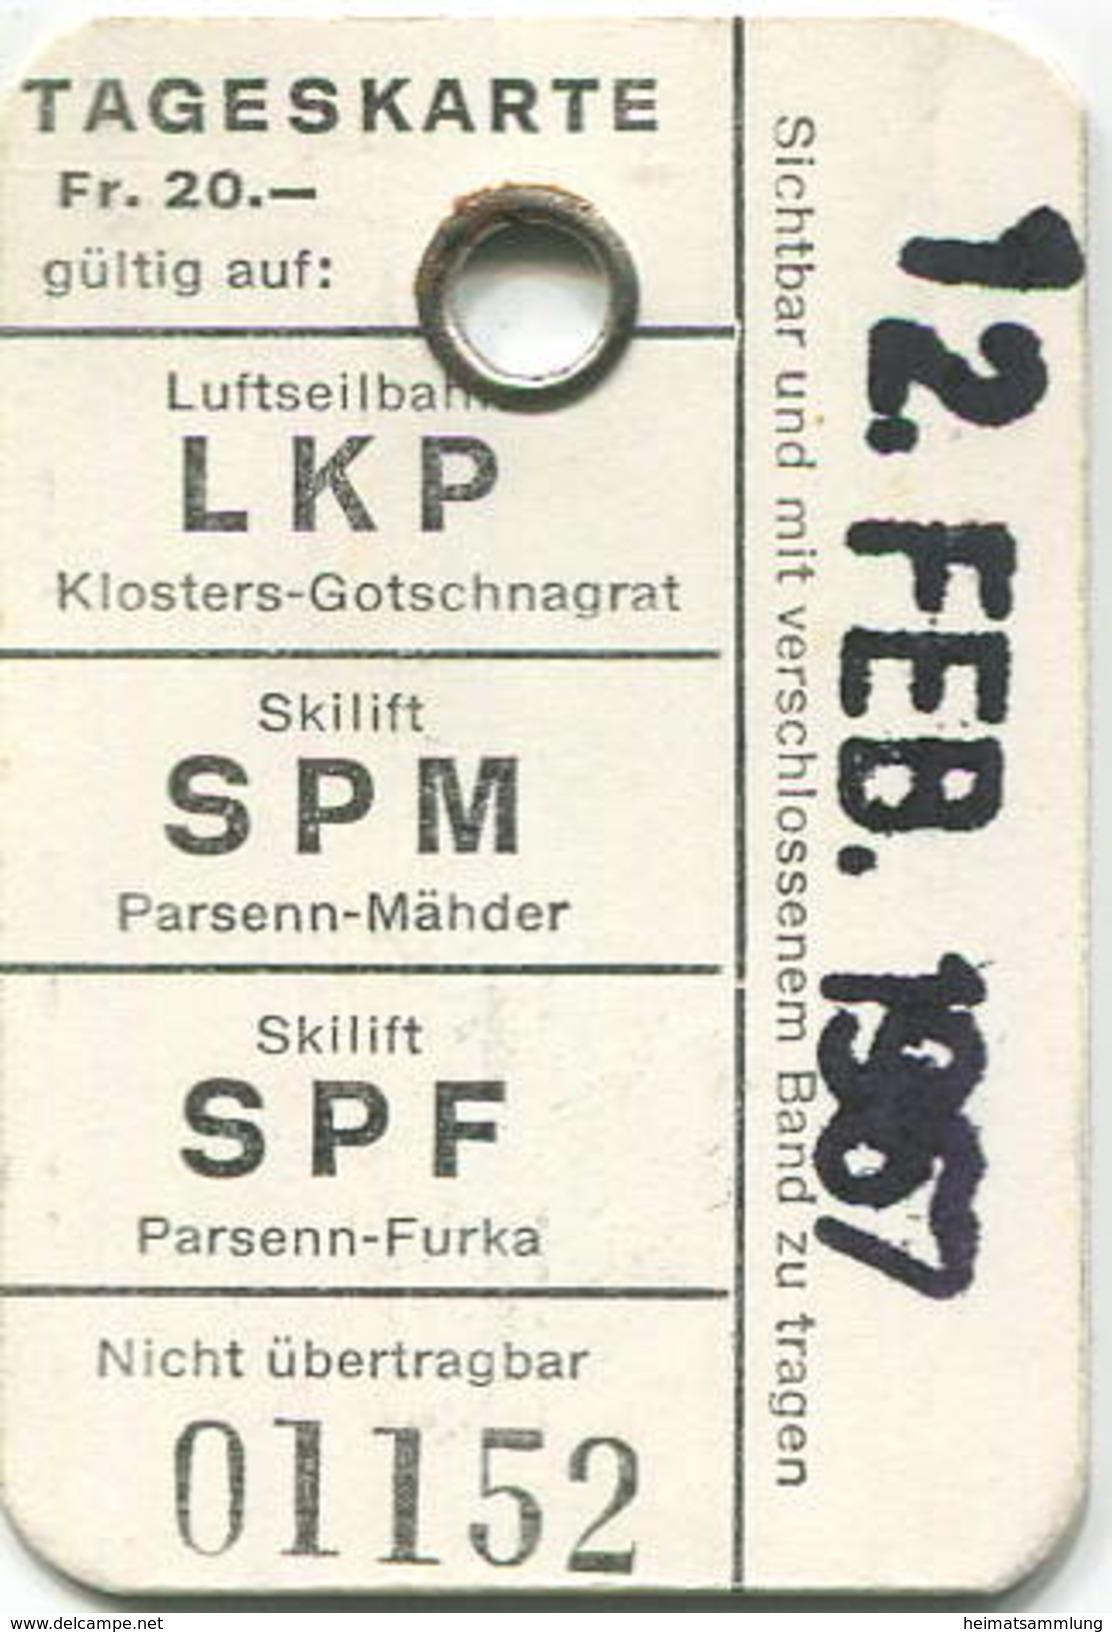 Schweiz - Tageskarte - Luftseilbahn - Skilift - LKP SPM SPF 1967 - Europe